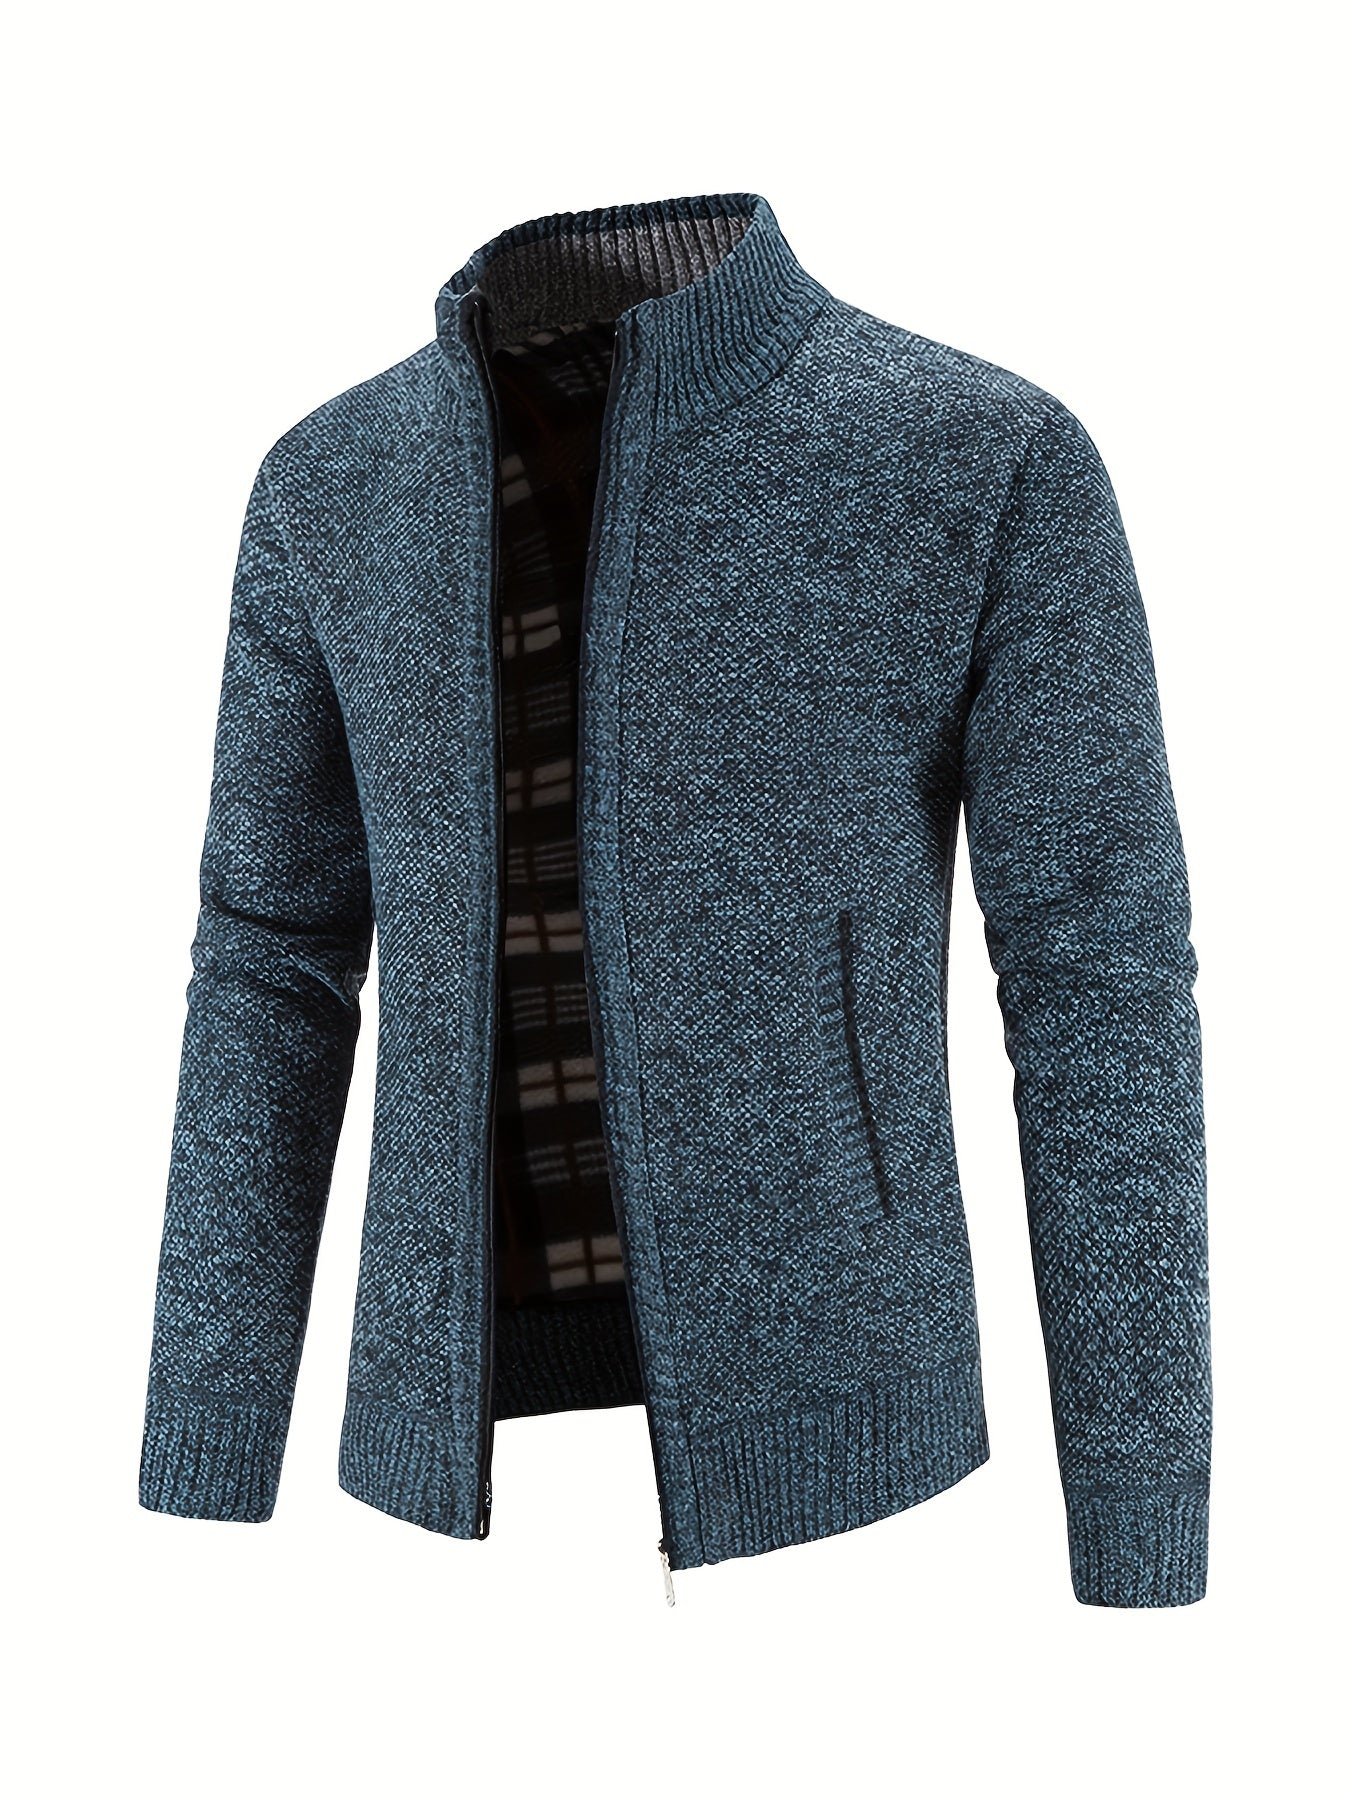 Foruwish - Men's Full Zip Up Casual Cardigan, Patchwork Thermal Regular Fit Knit Sweater